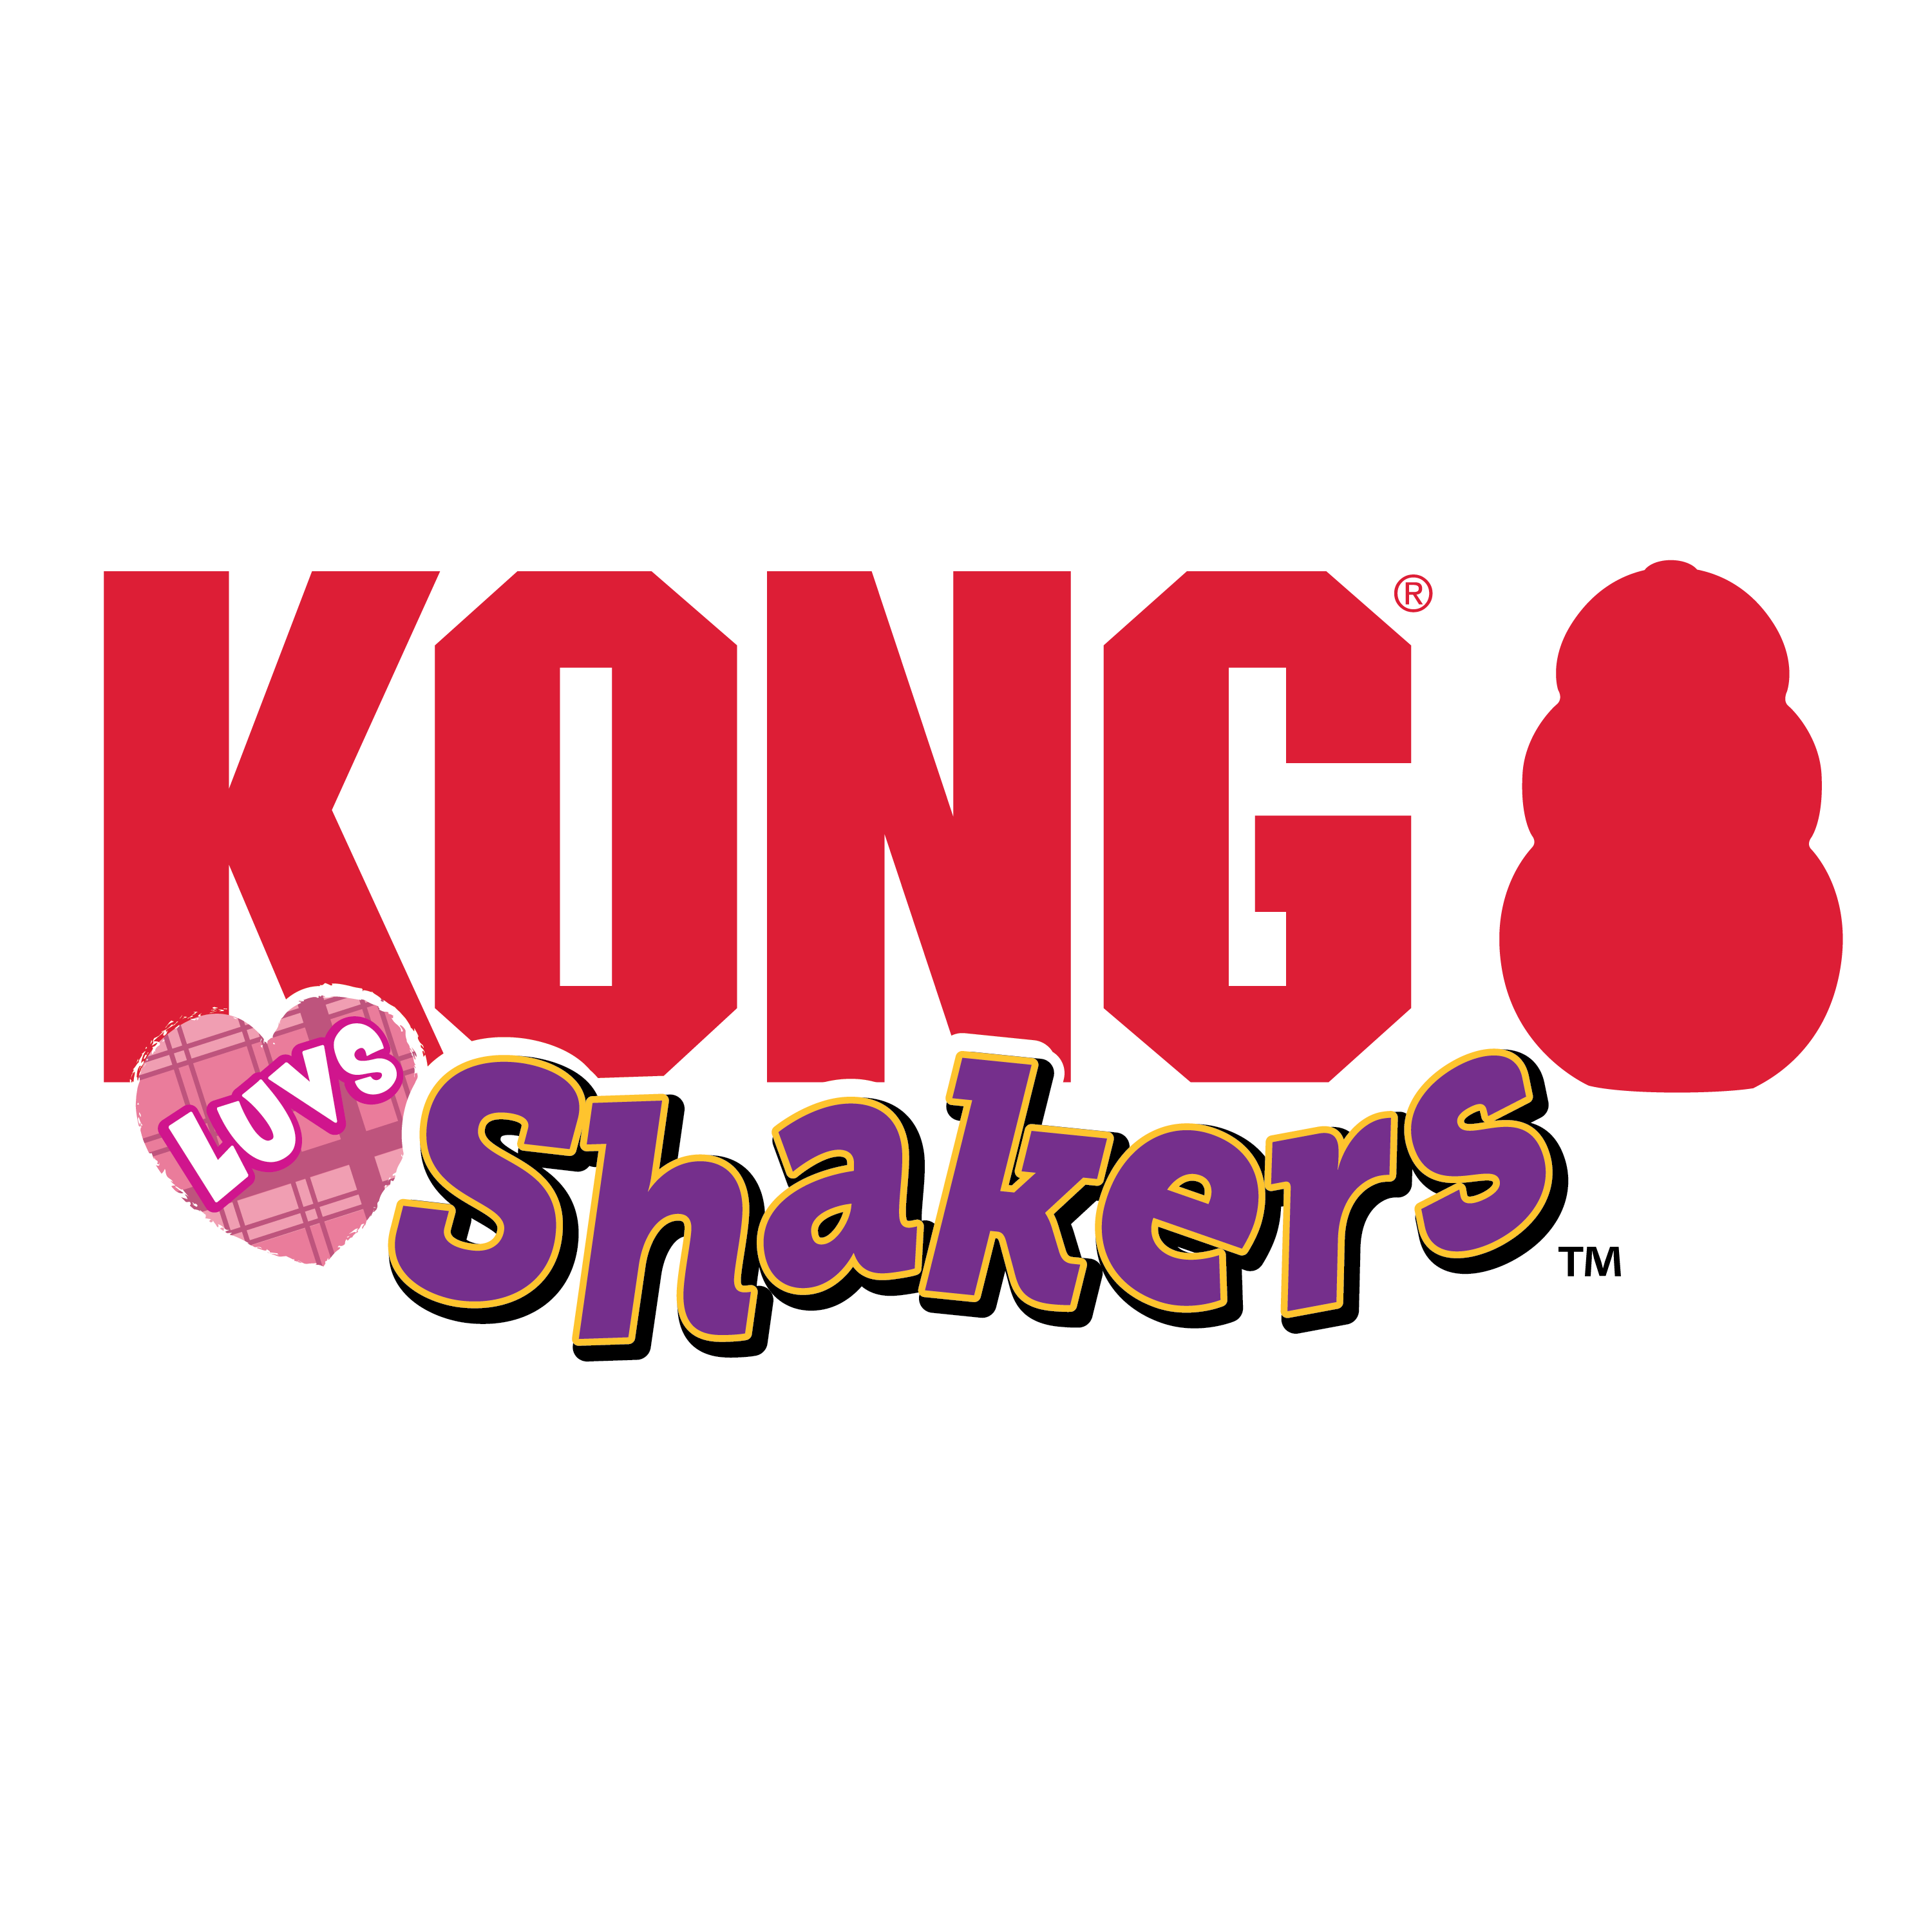 Product Kong Company 